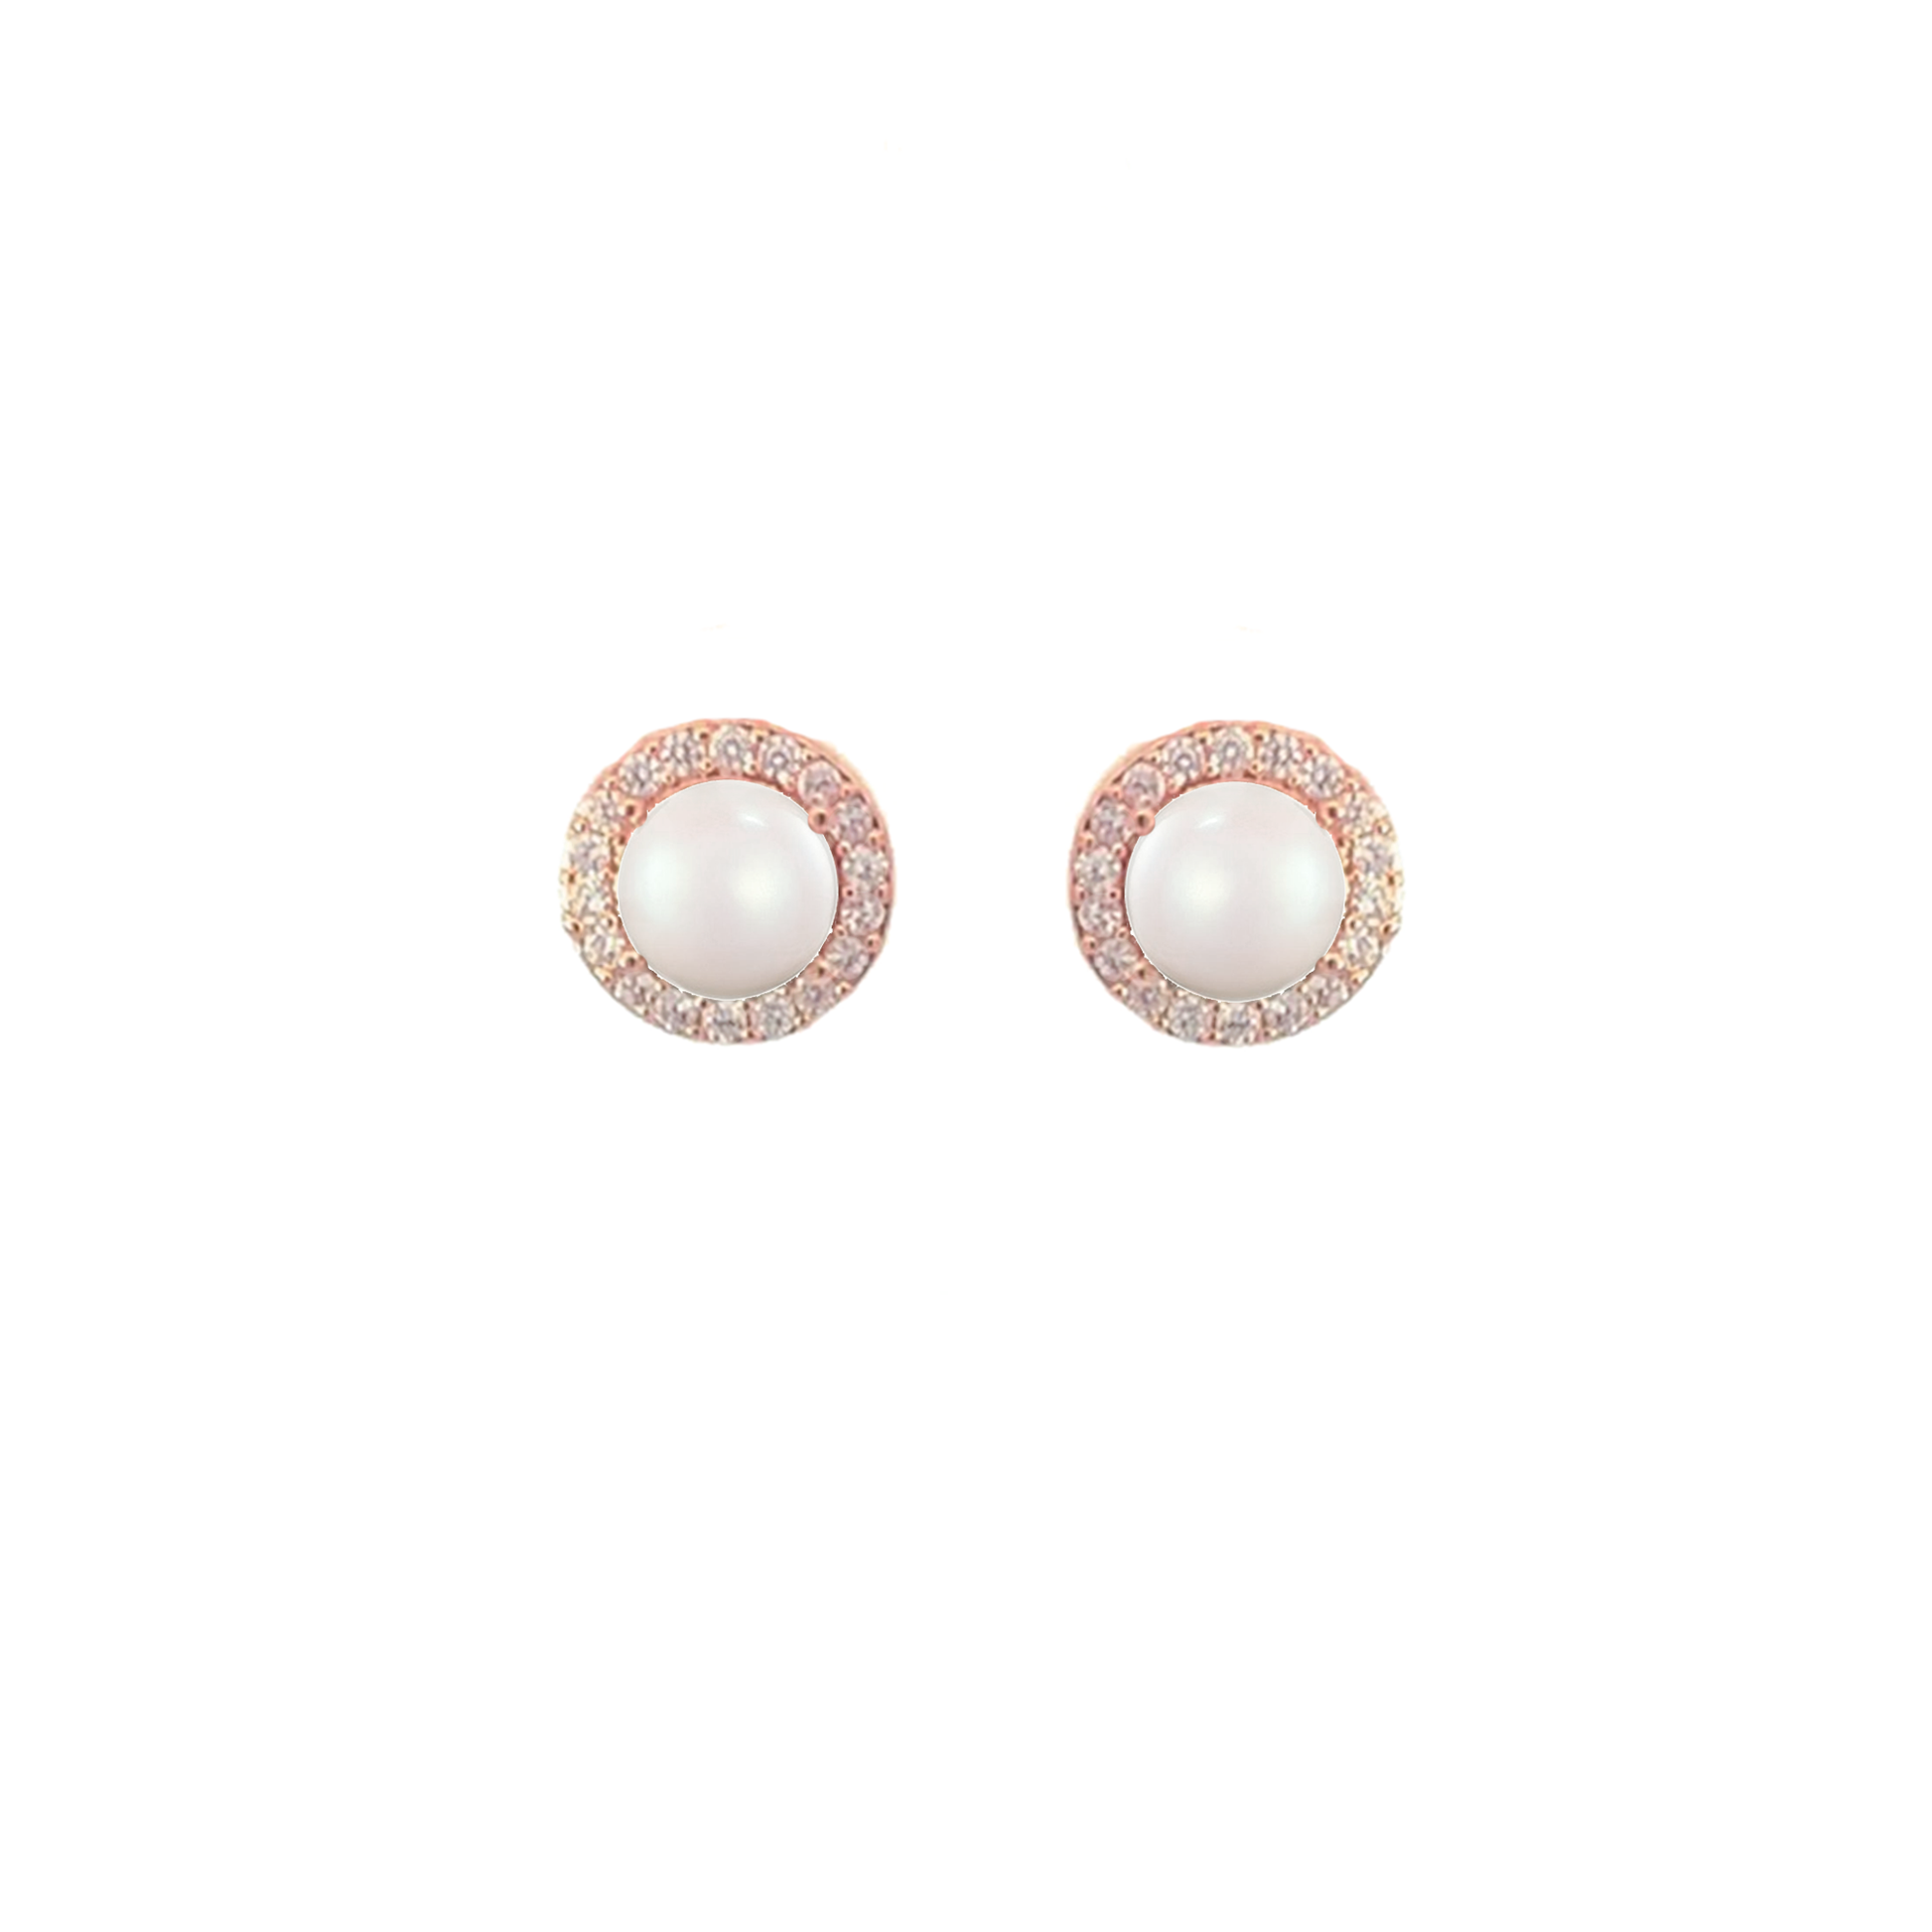 Pearl halo stud earrings rose gold